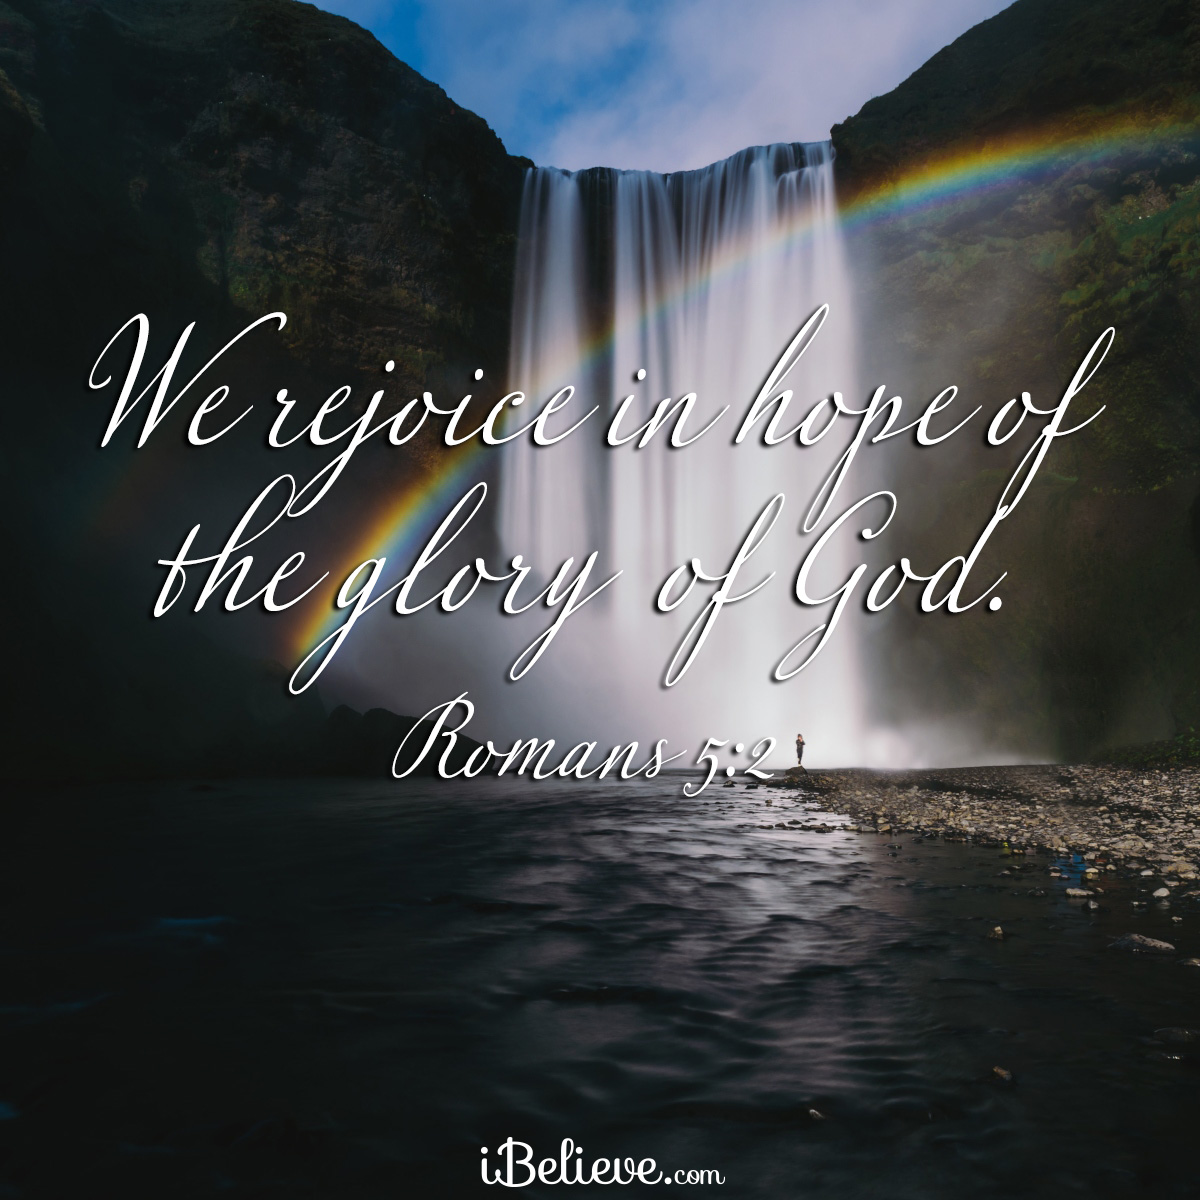 Romans 5:2, inspirational image